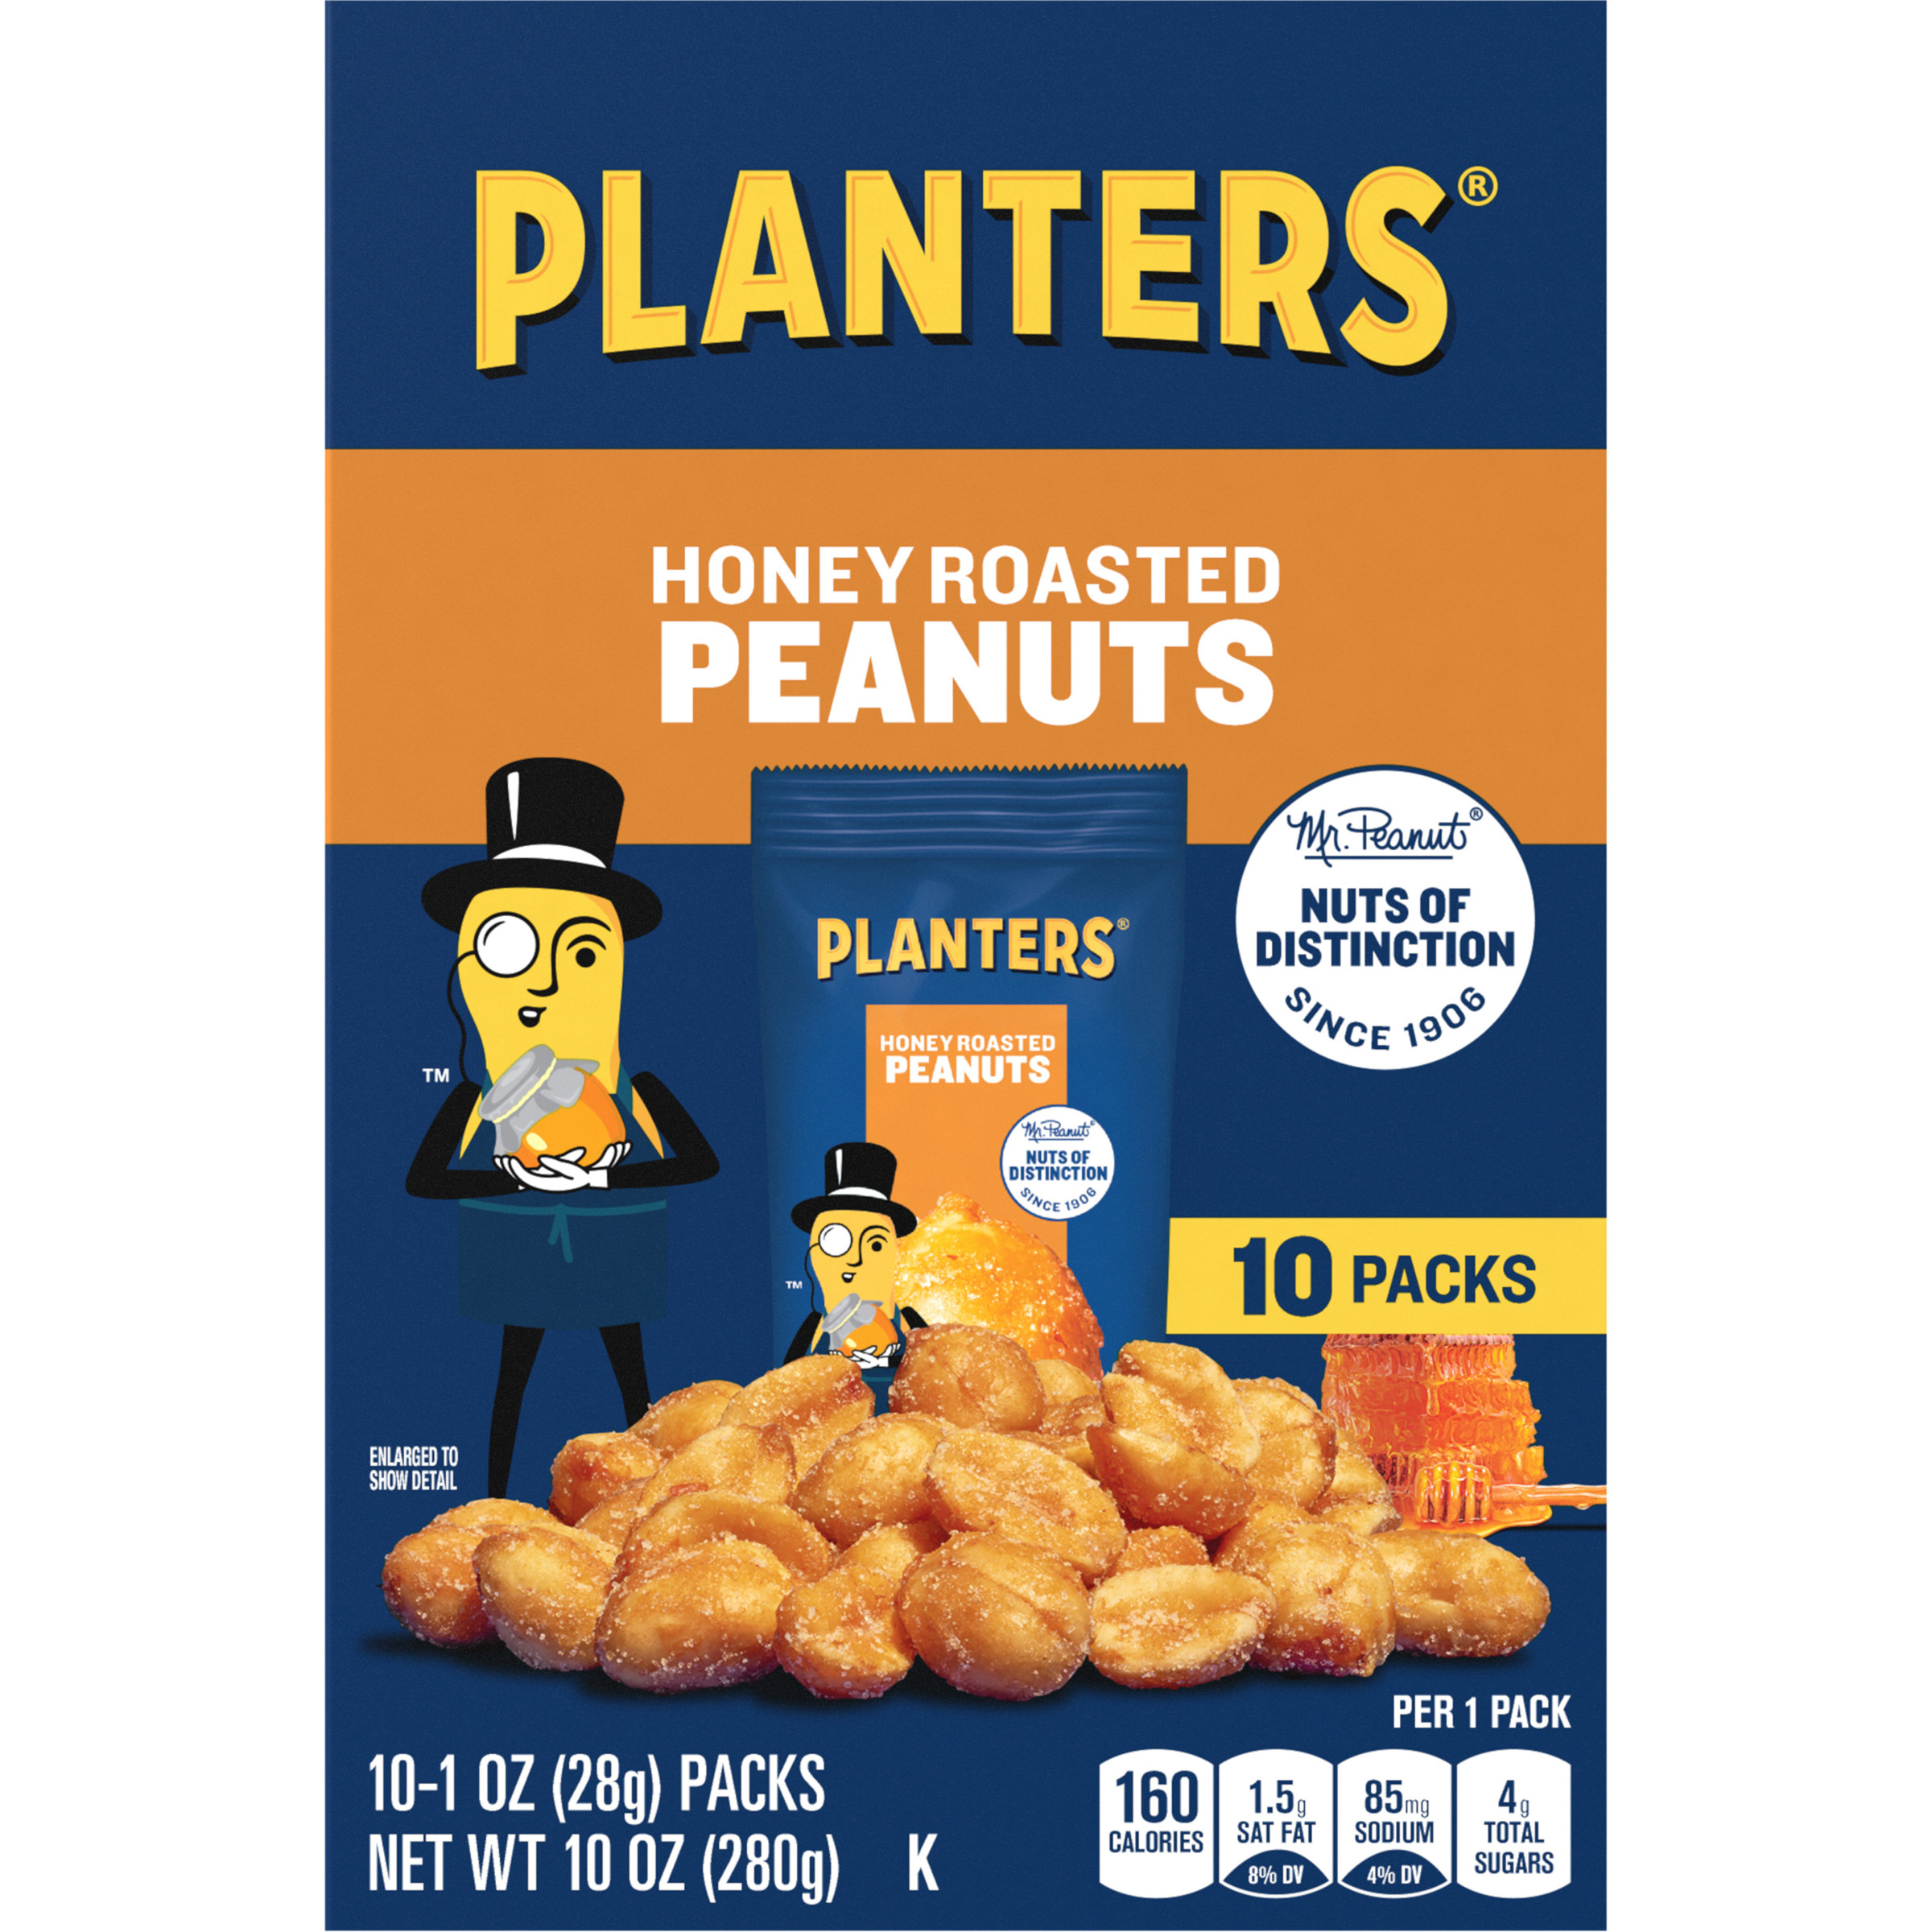 PLANTERS Honey Roasted Peanuts, 10 Ct Box, 1 oz Packs - image 1 of 15